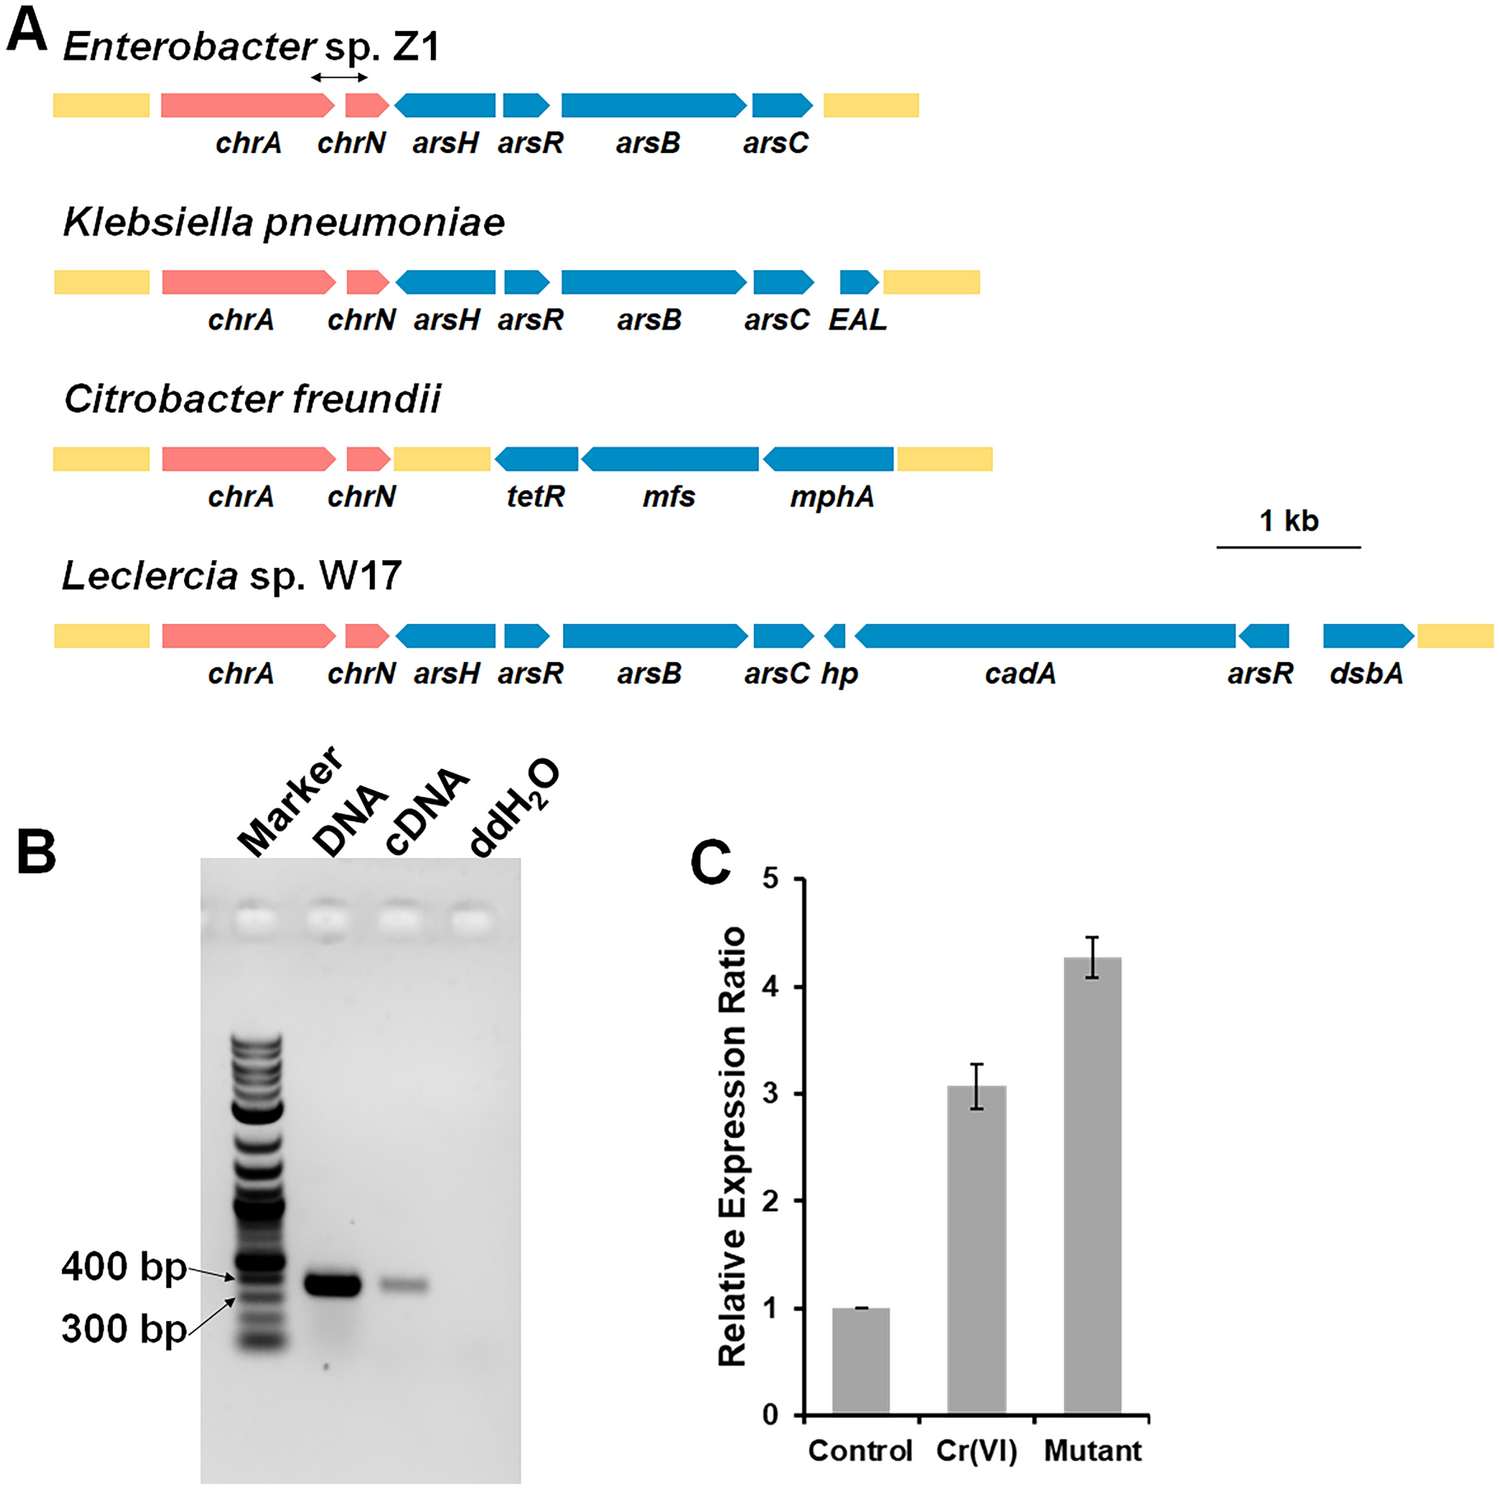 A PadR family transcriptional repressor regulates the transcription of chromate efflux transporter in Enterobacter sp. Z1